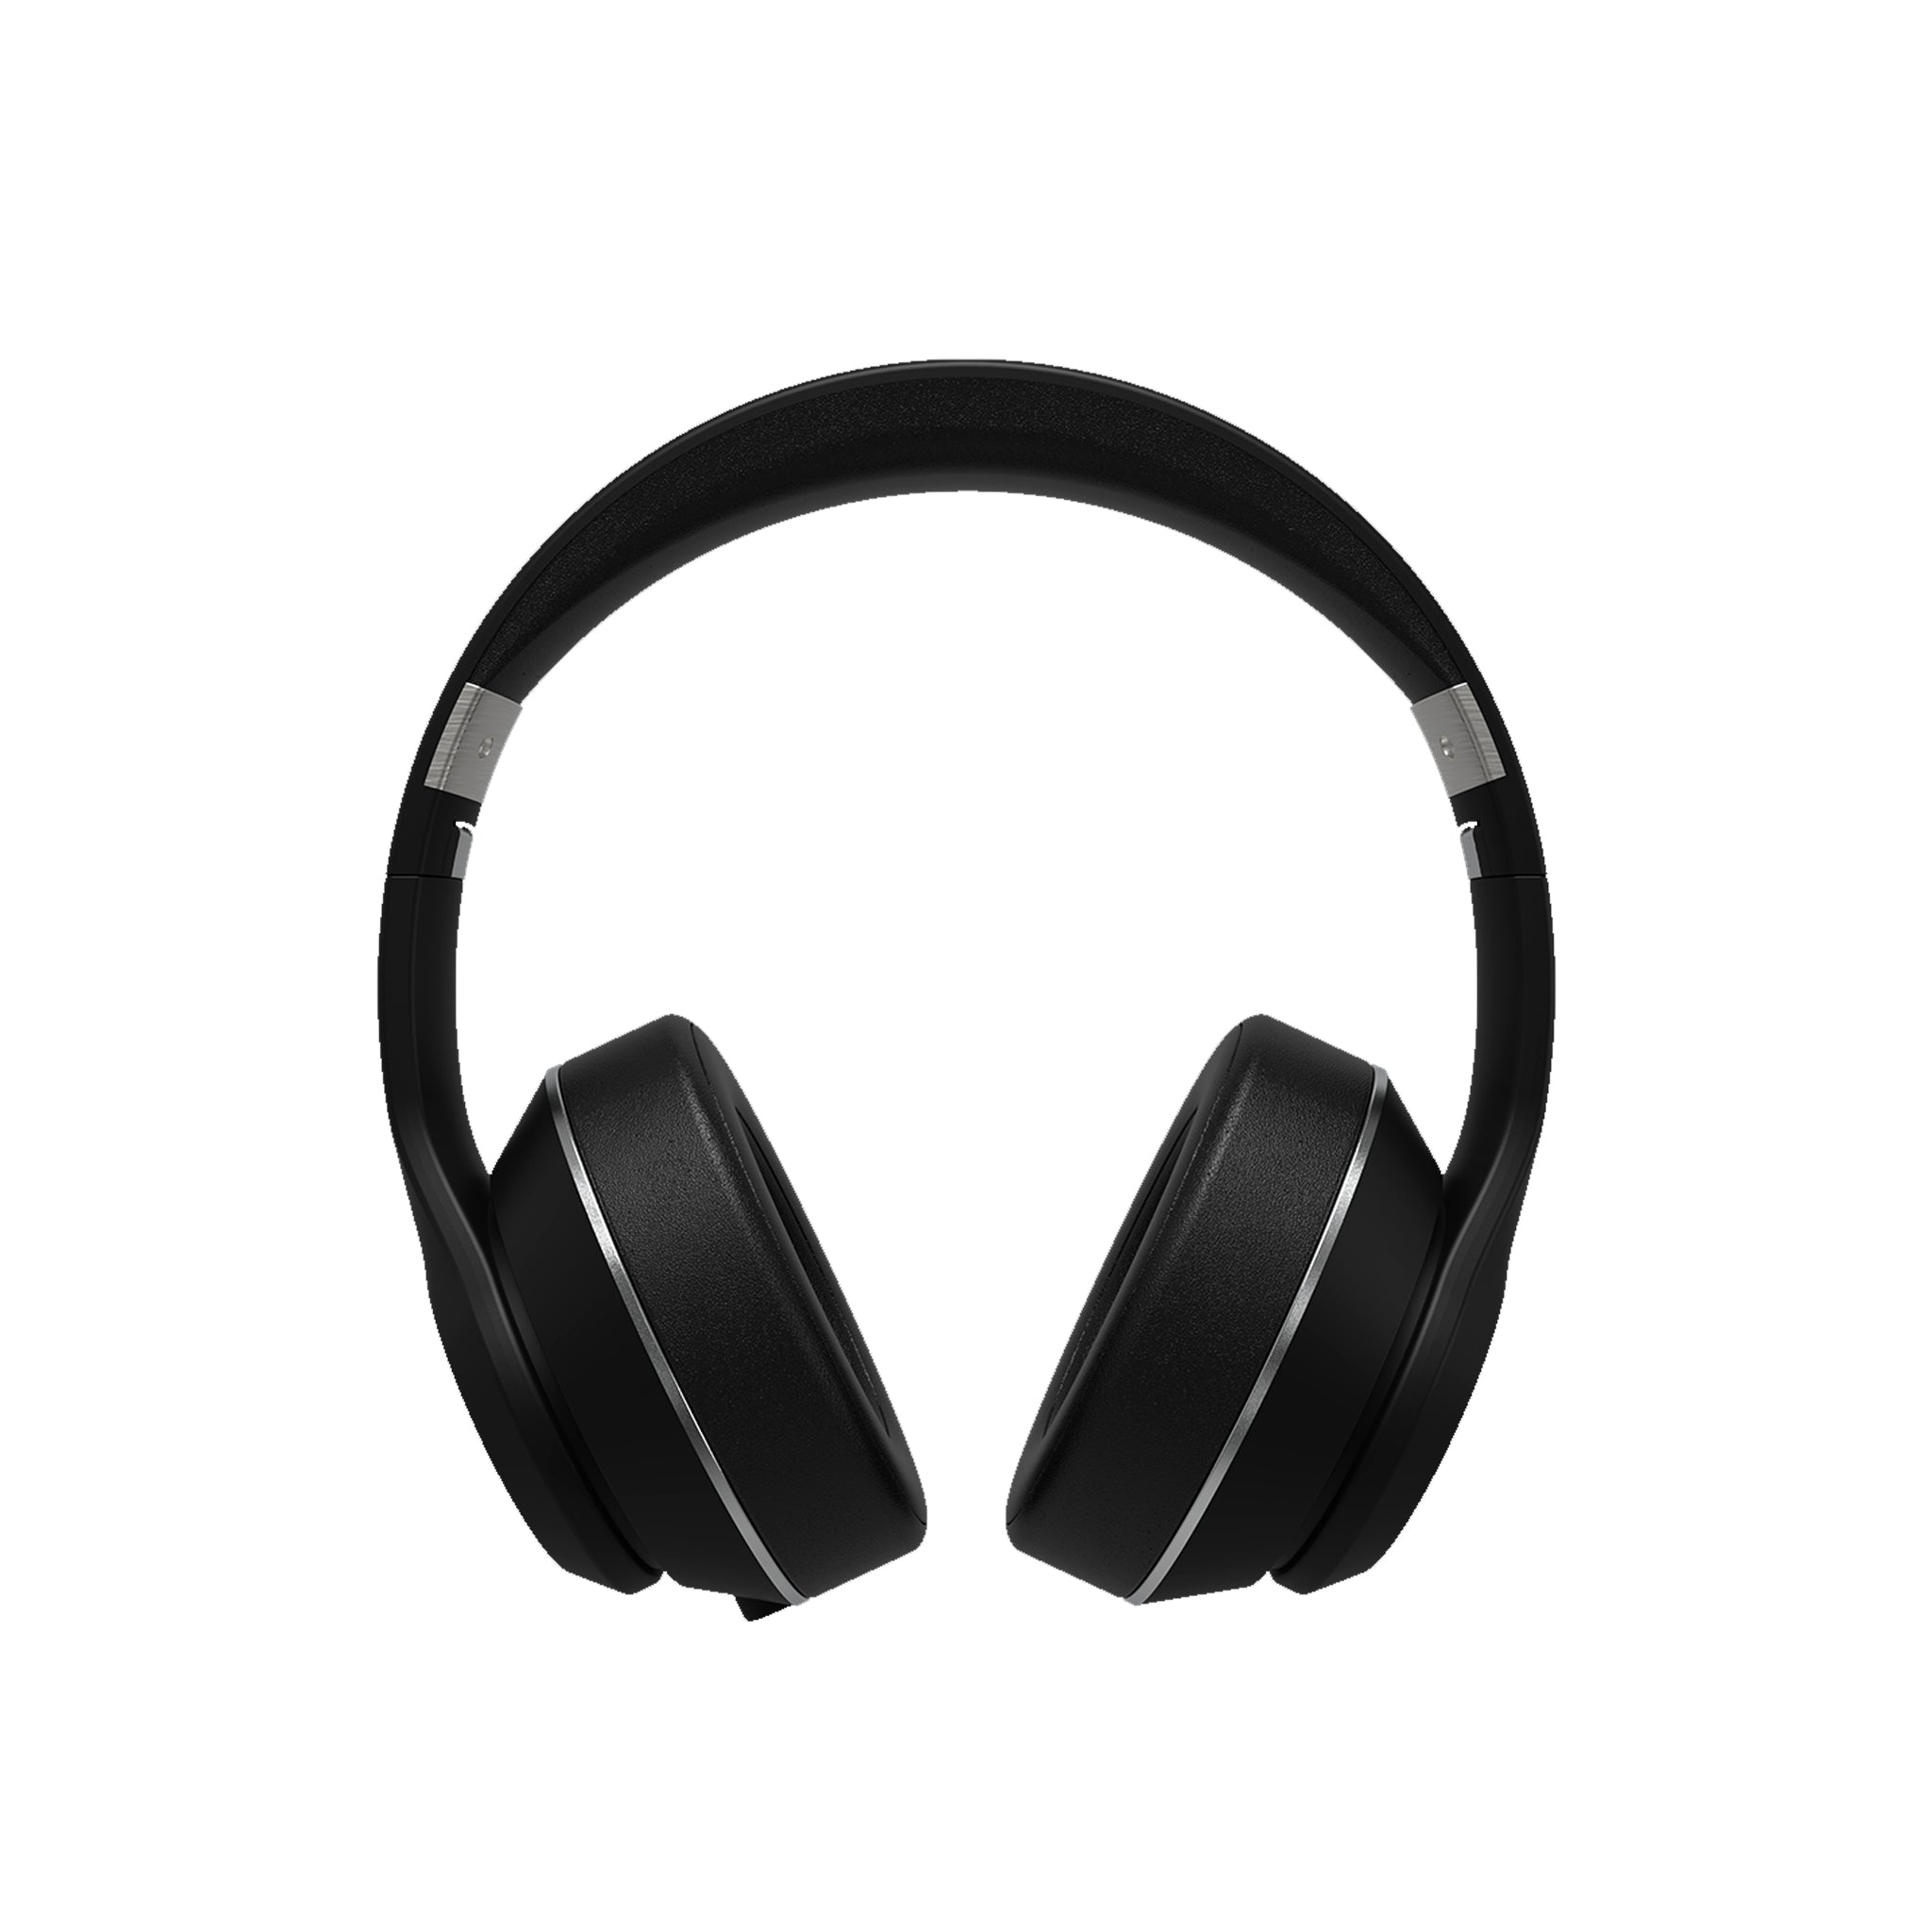 Ifrogz - Impulse 2 Over Ear Bluetooth Headphones - Black